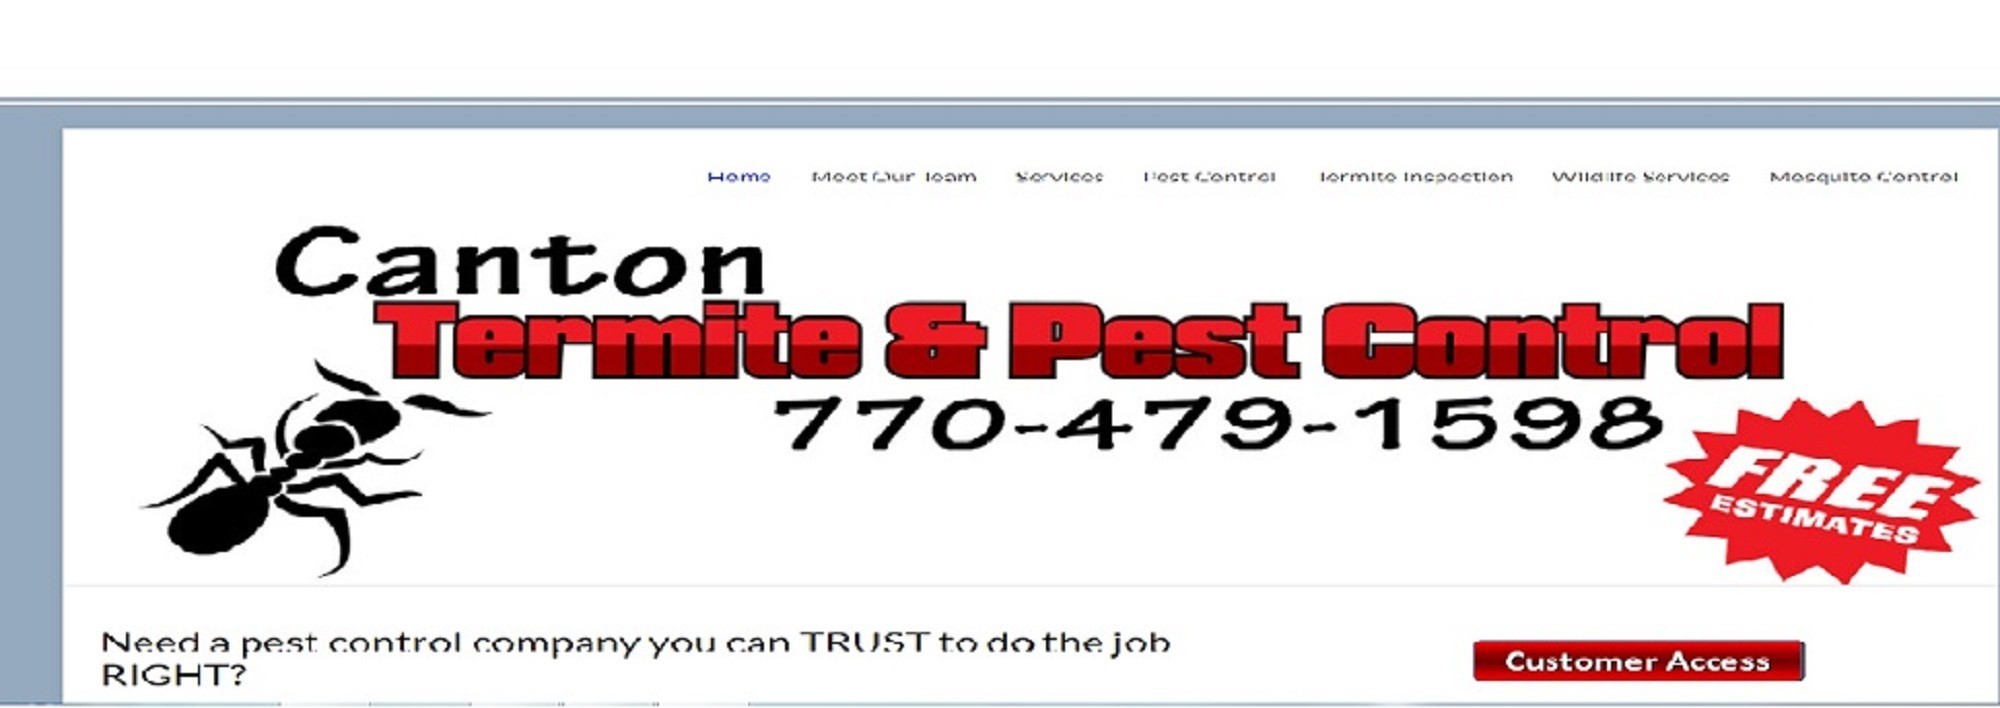 Canton Termite & Pest Control GA | Pest Control Company Canton GA		